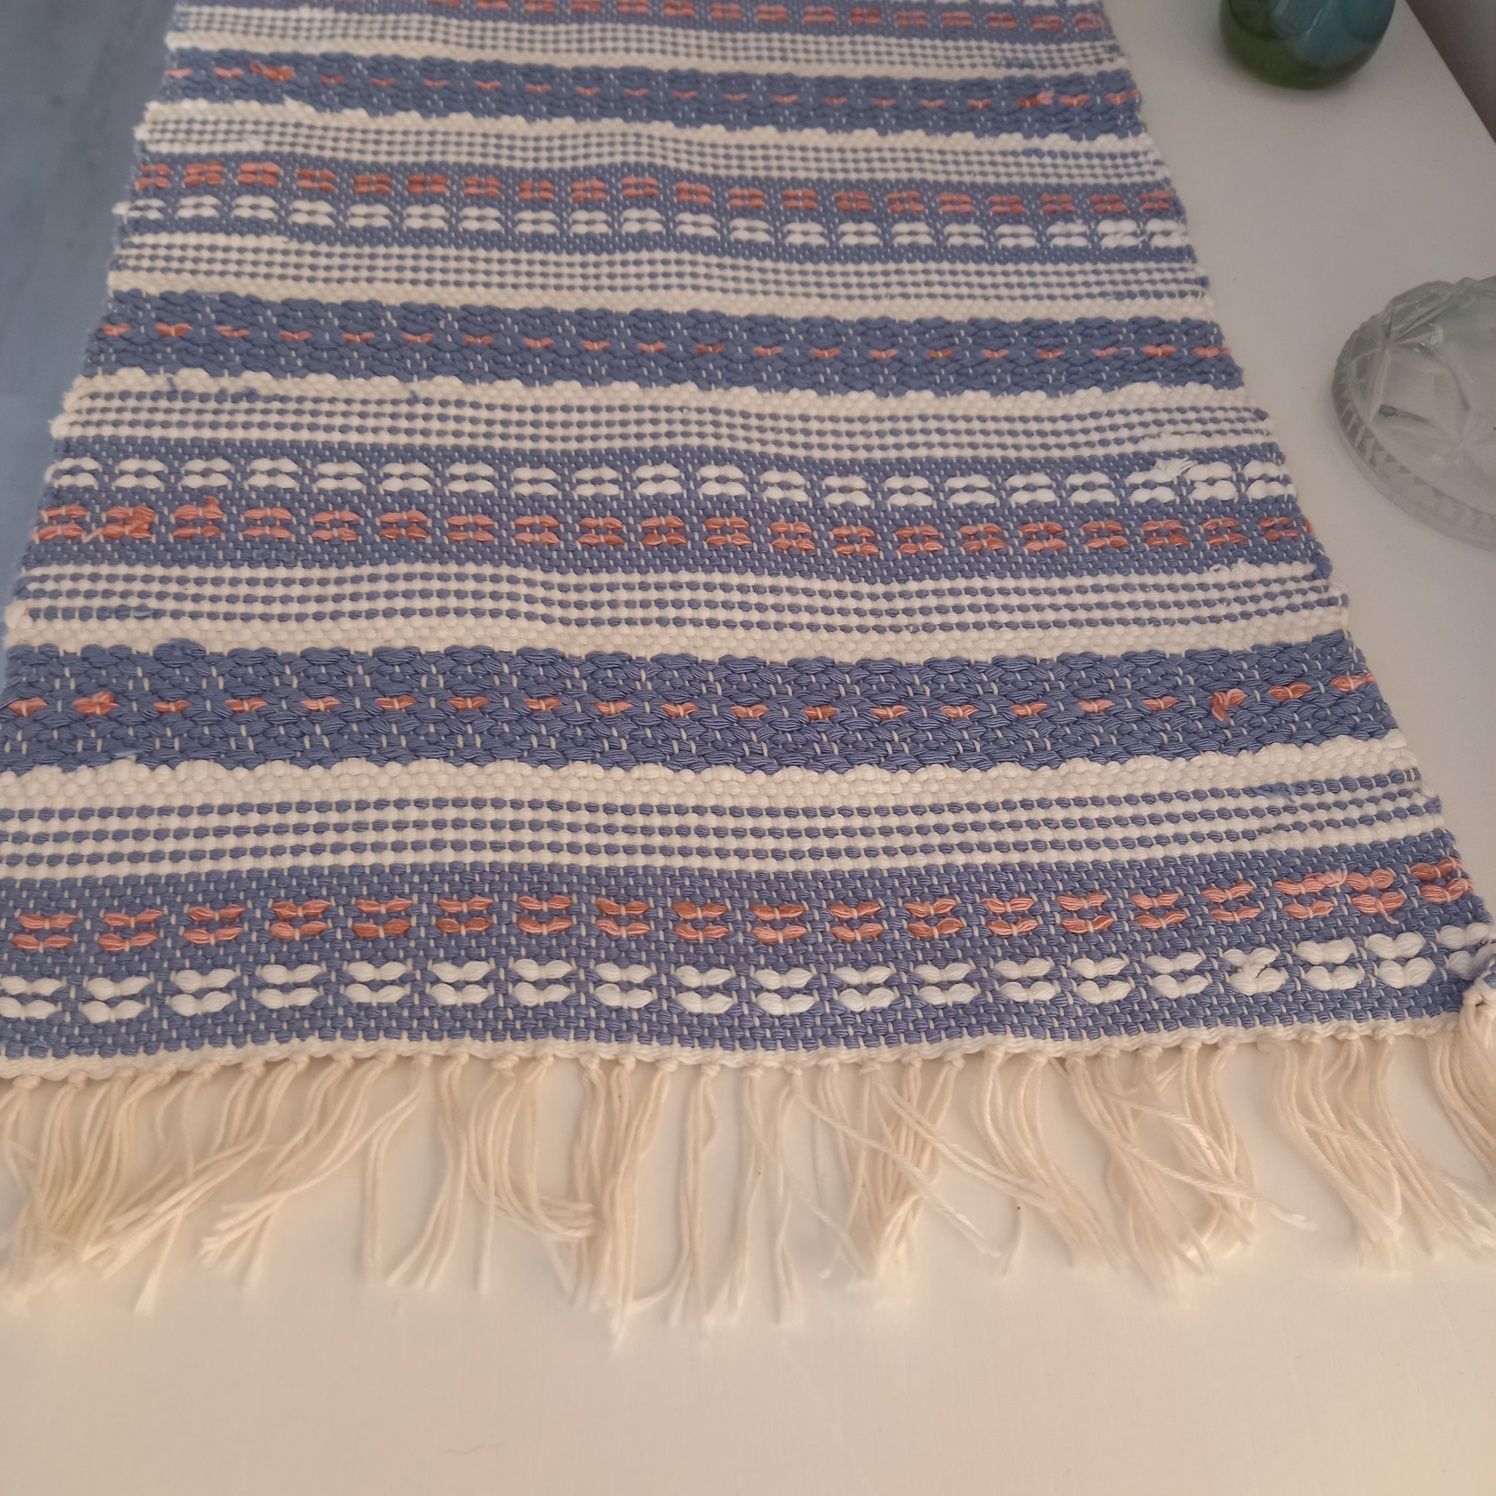 Ekskluzywny kilim kilimek błękitny bawełna obrus obrusik makata handma